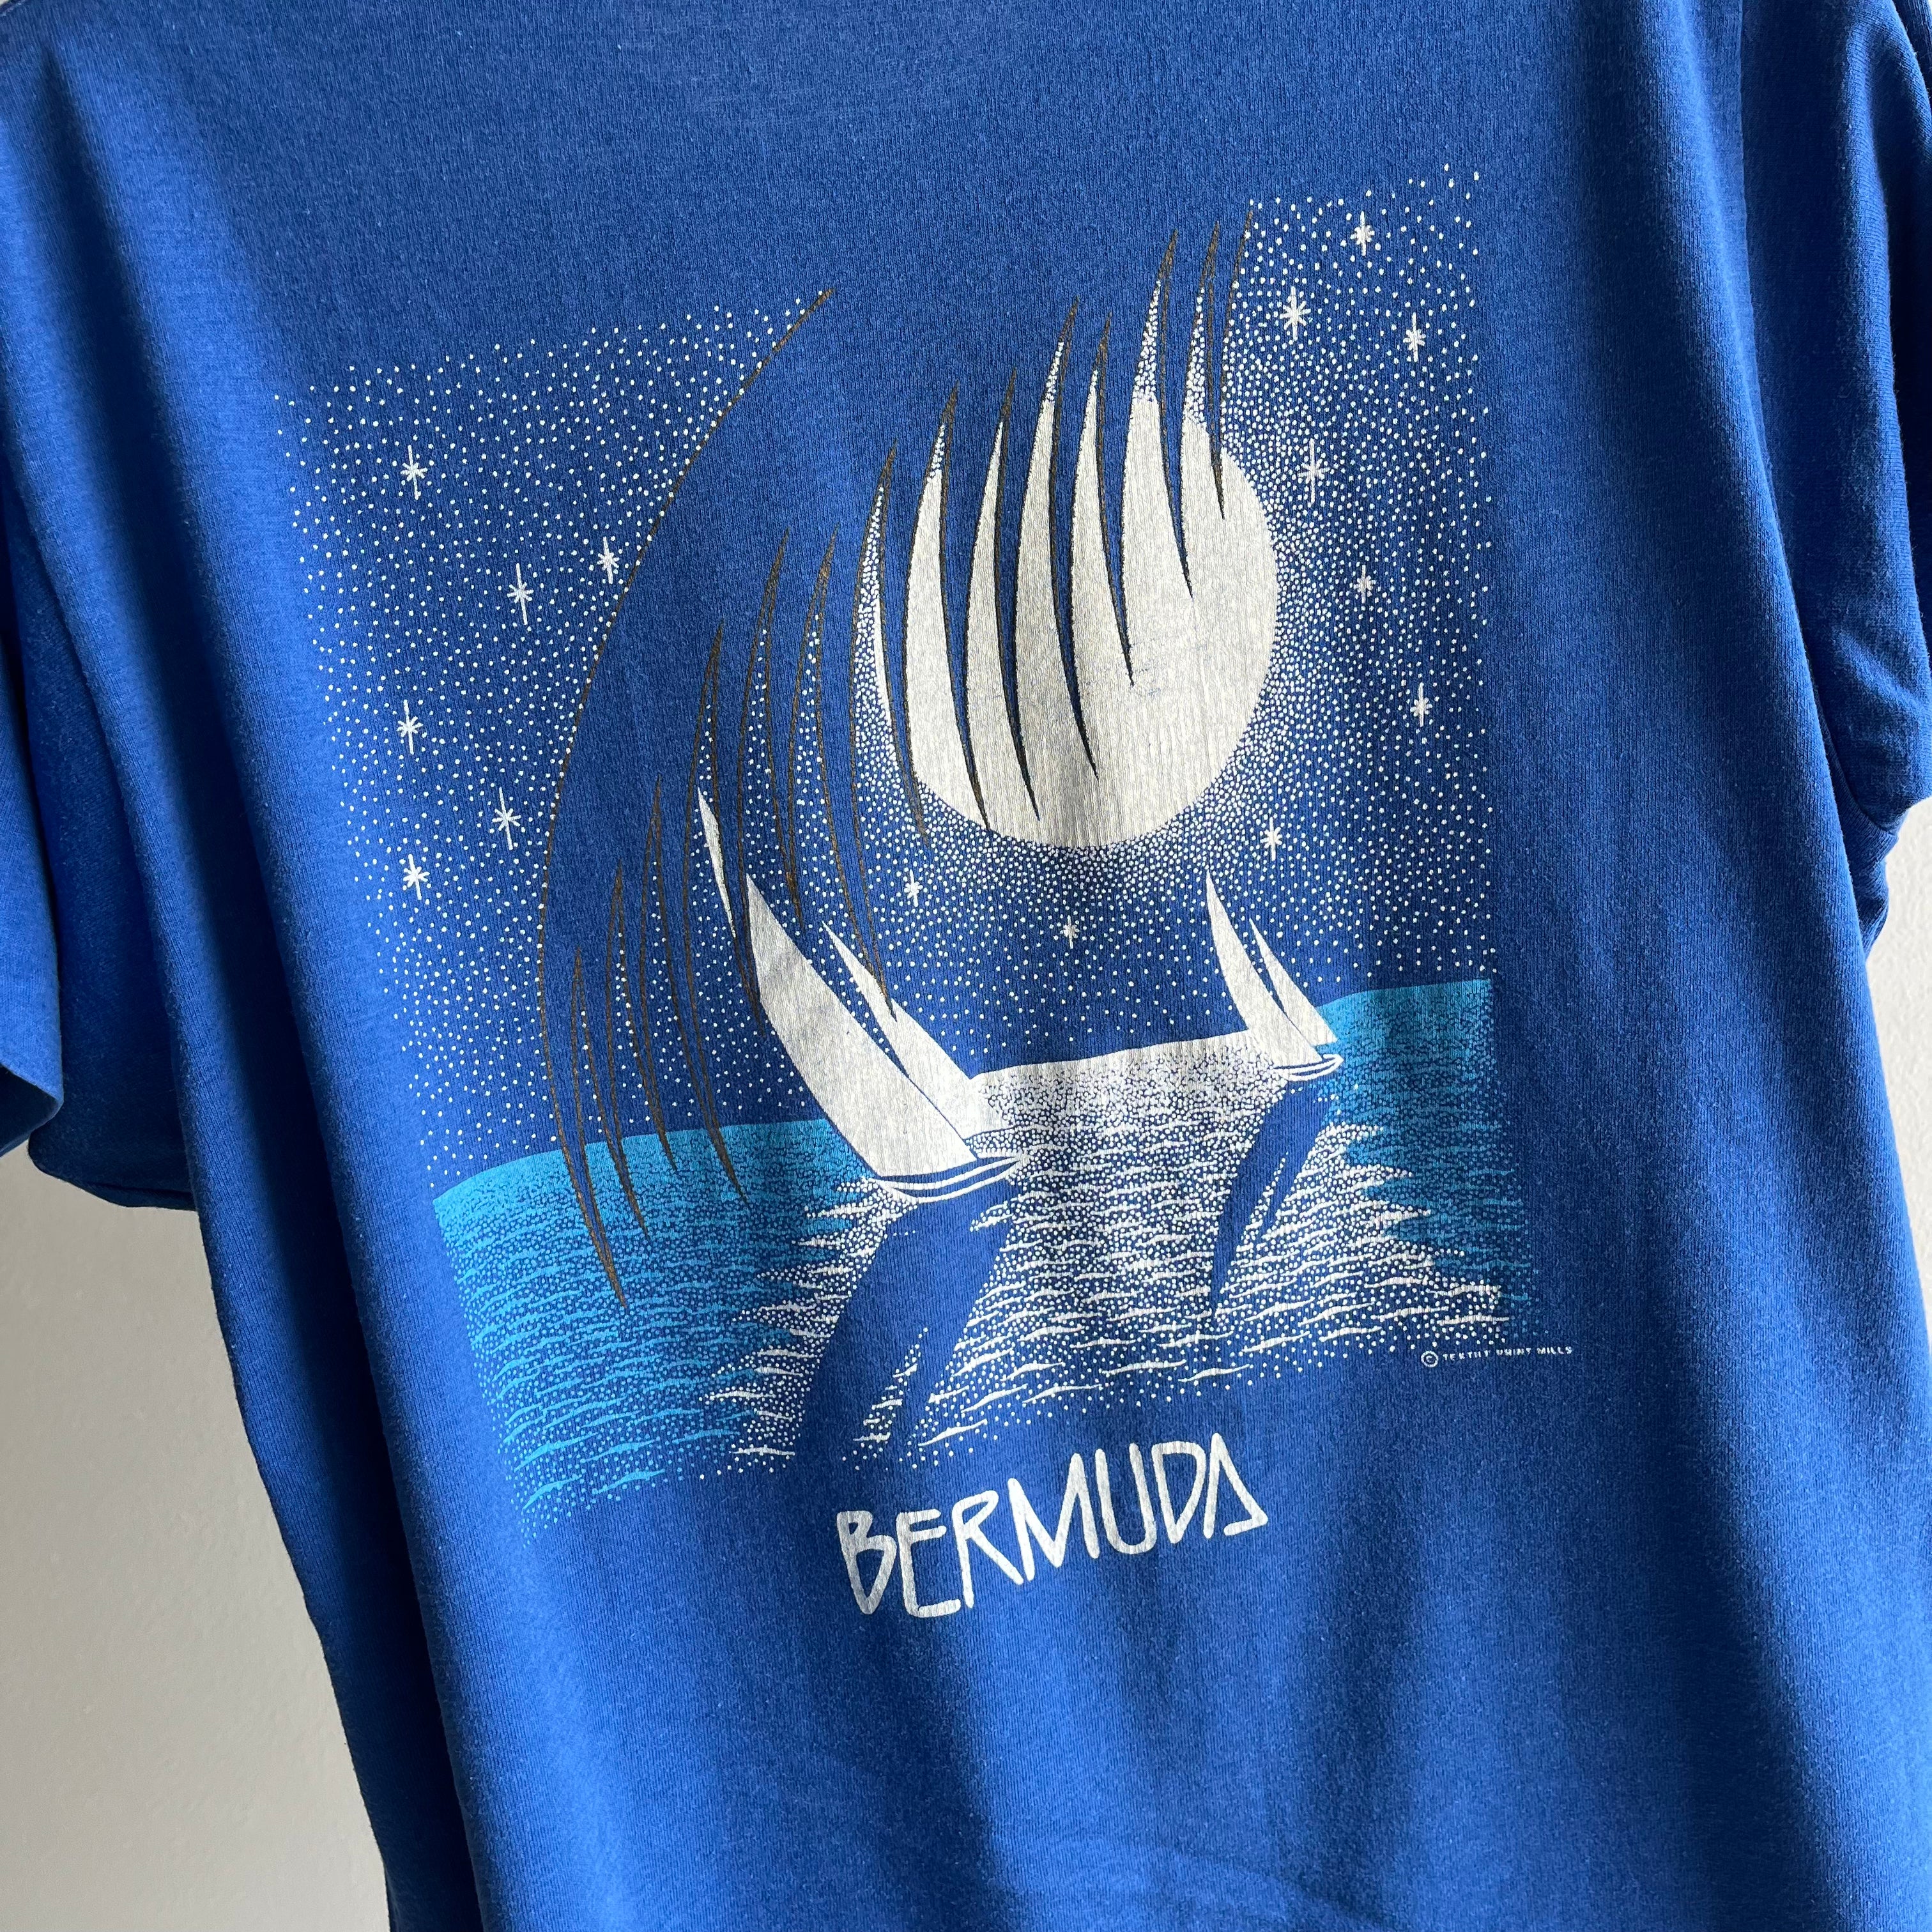 198o Bermuda Really Cool Pocket T-Shirt - The Backside!!!